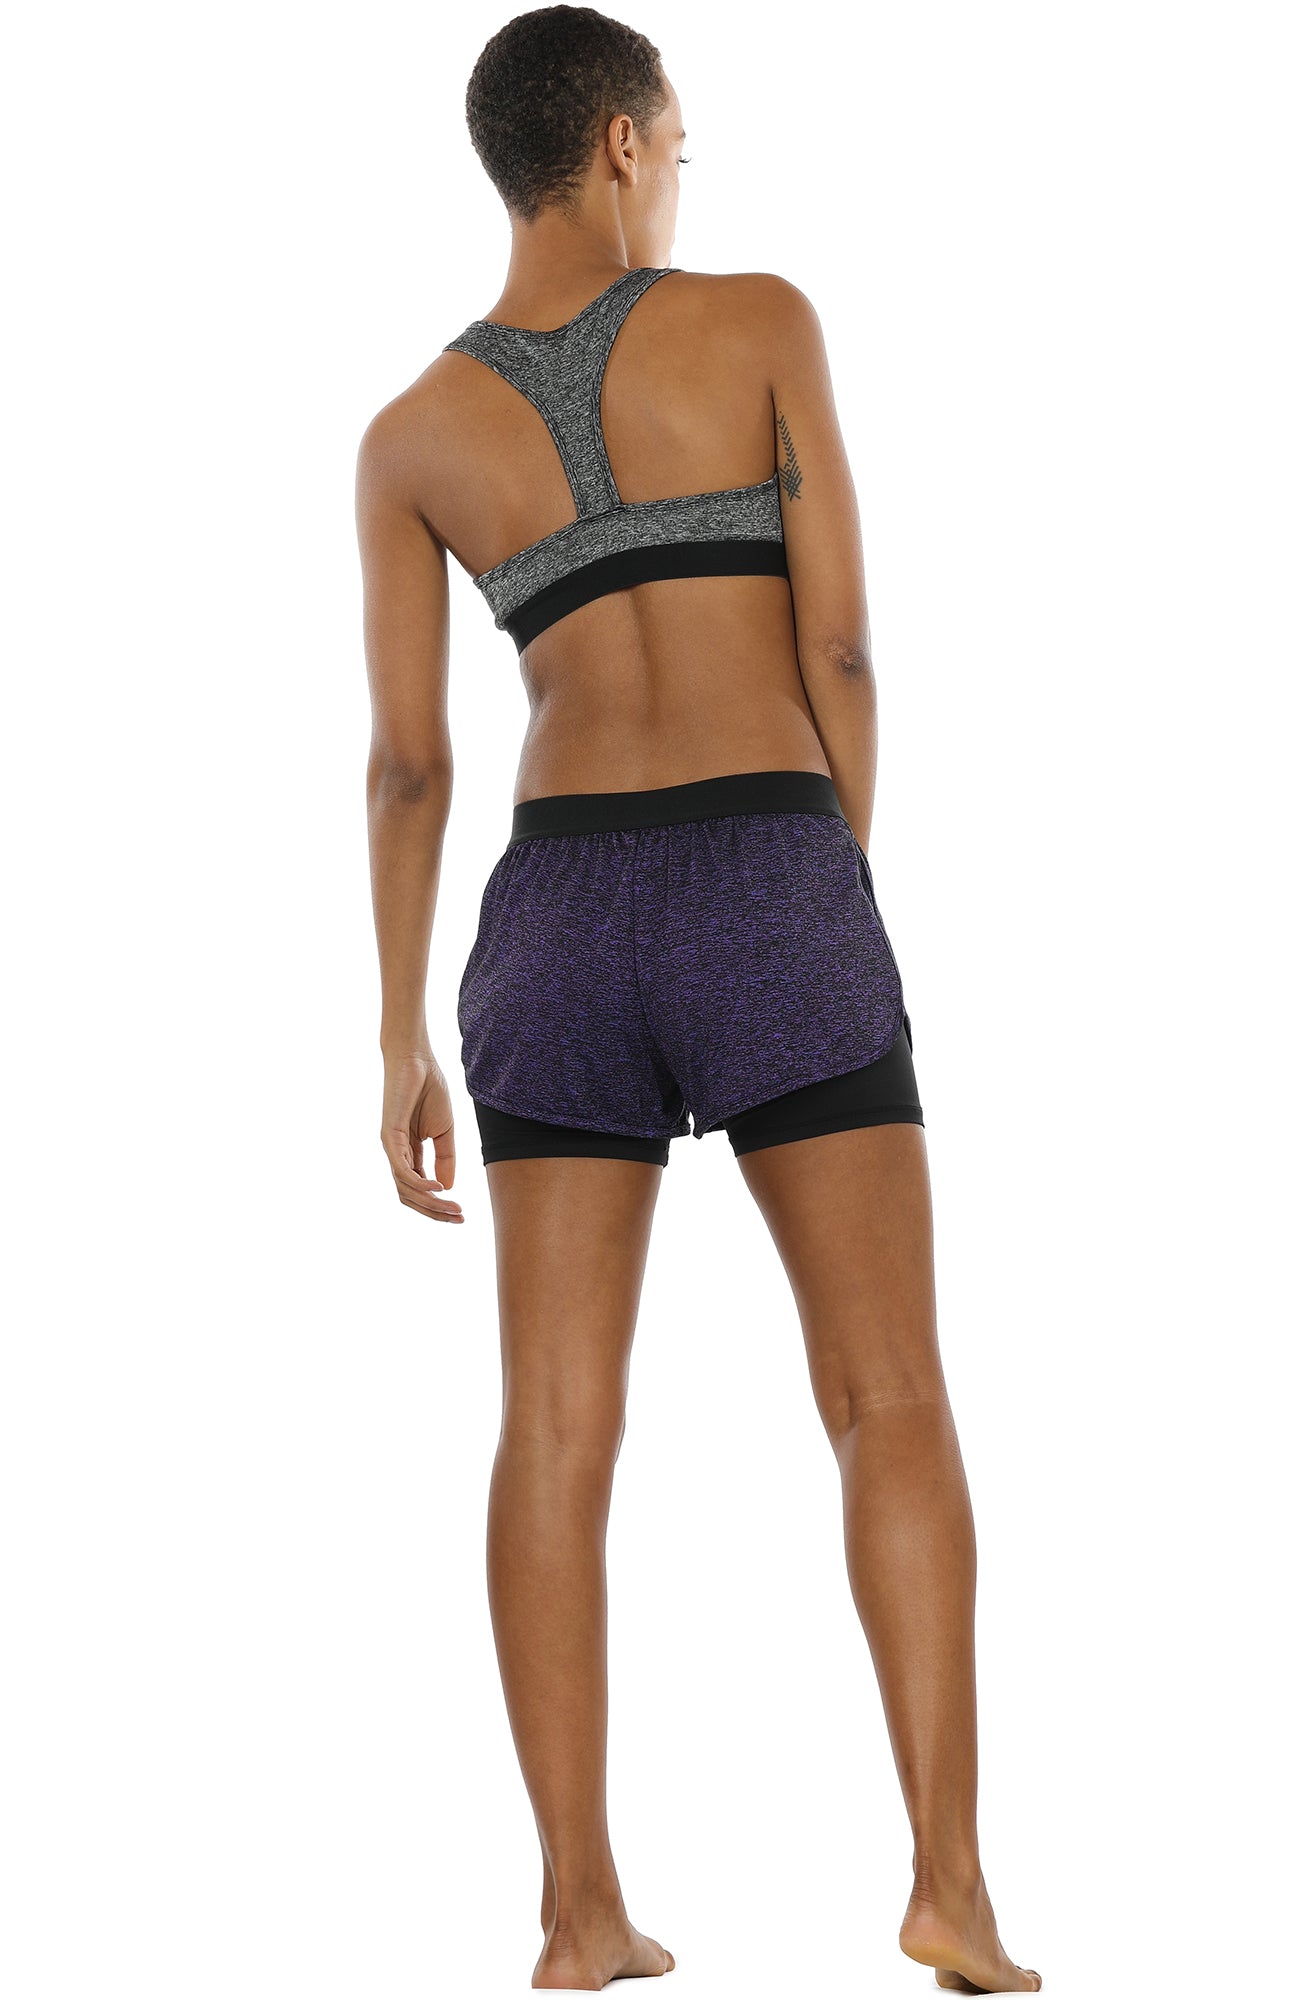 Shok Yoga Shorts - XL  Yoga shorts, Intense workout, Shorts